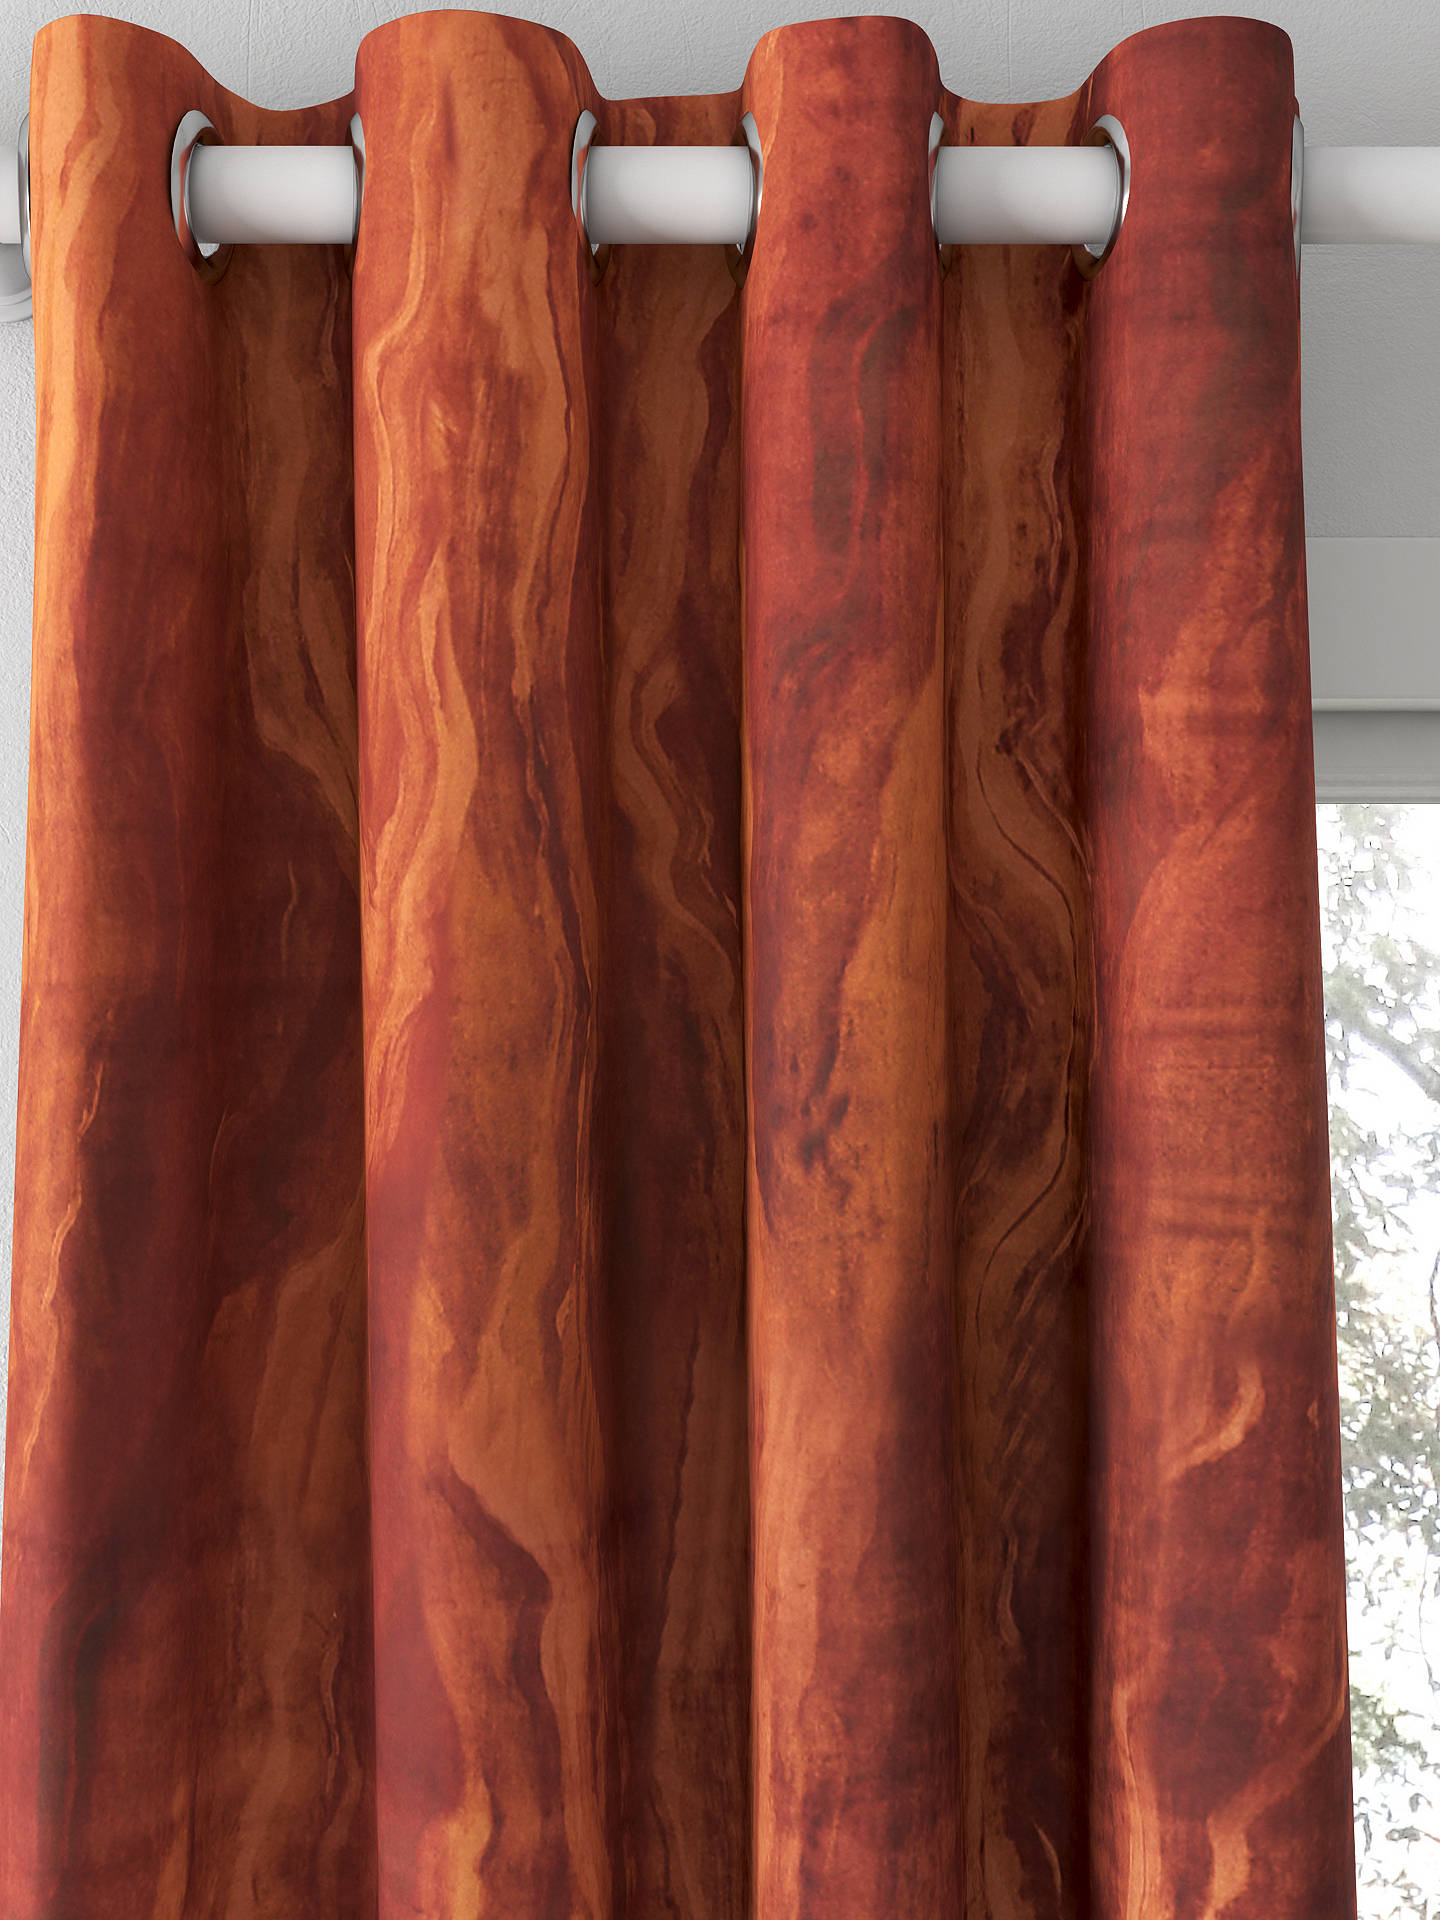 Prestigious Textiles Lava Made to Measure Curtains, Fire